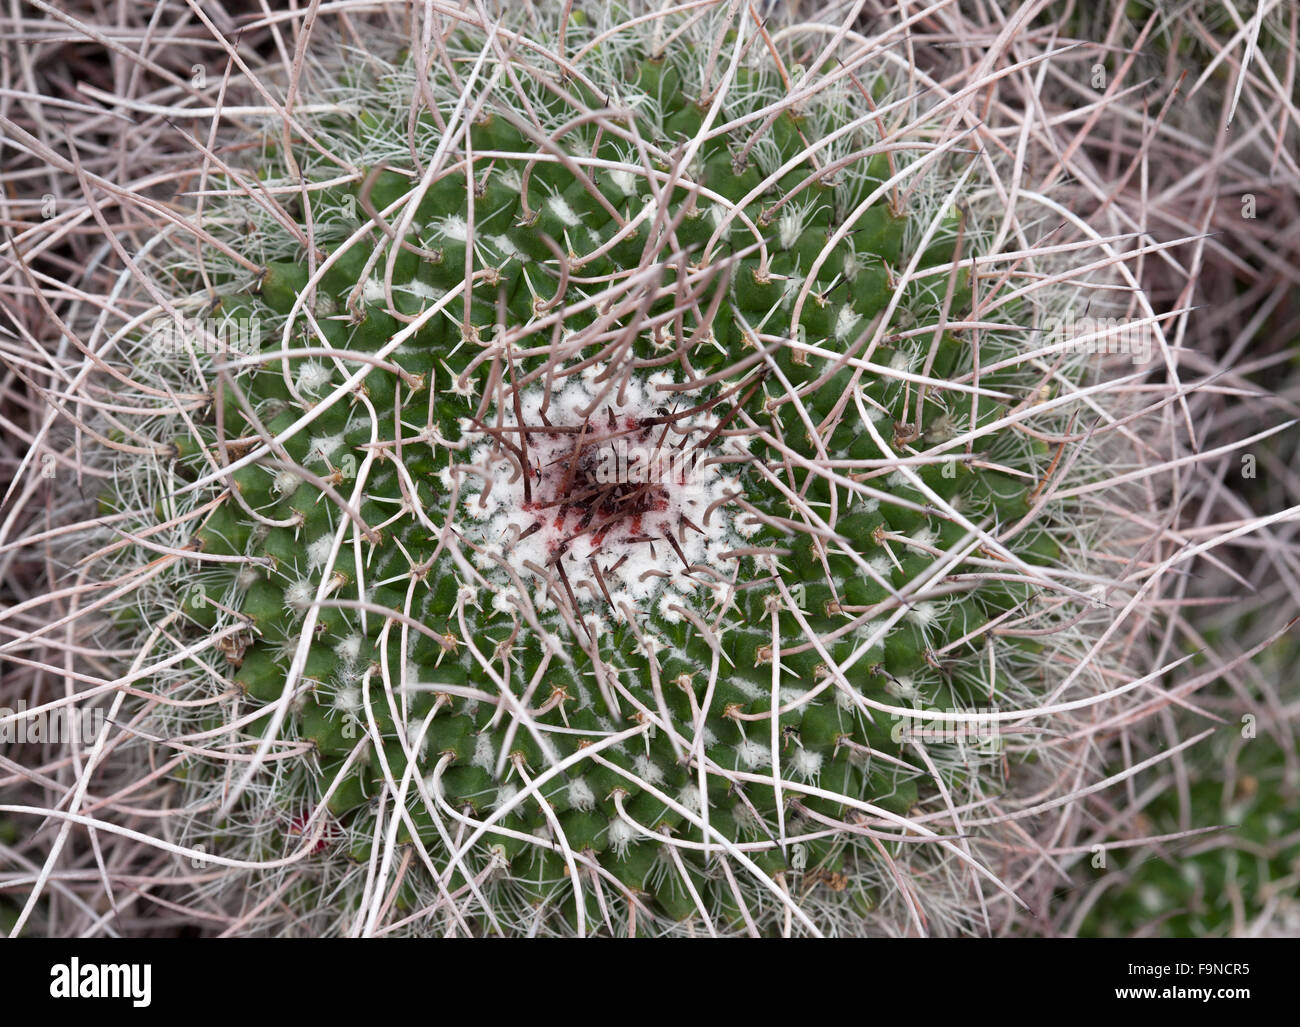 Mammillaria mystax cactus natural plant background Stock Photo